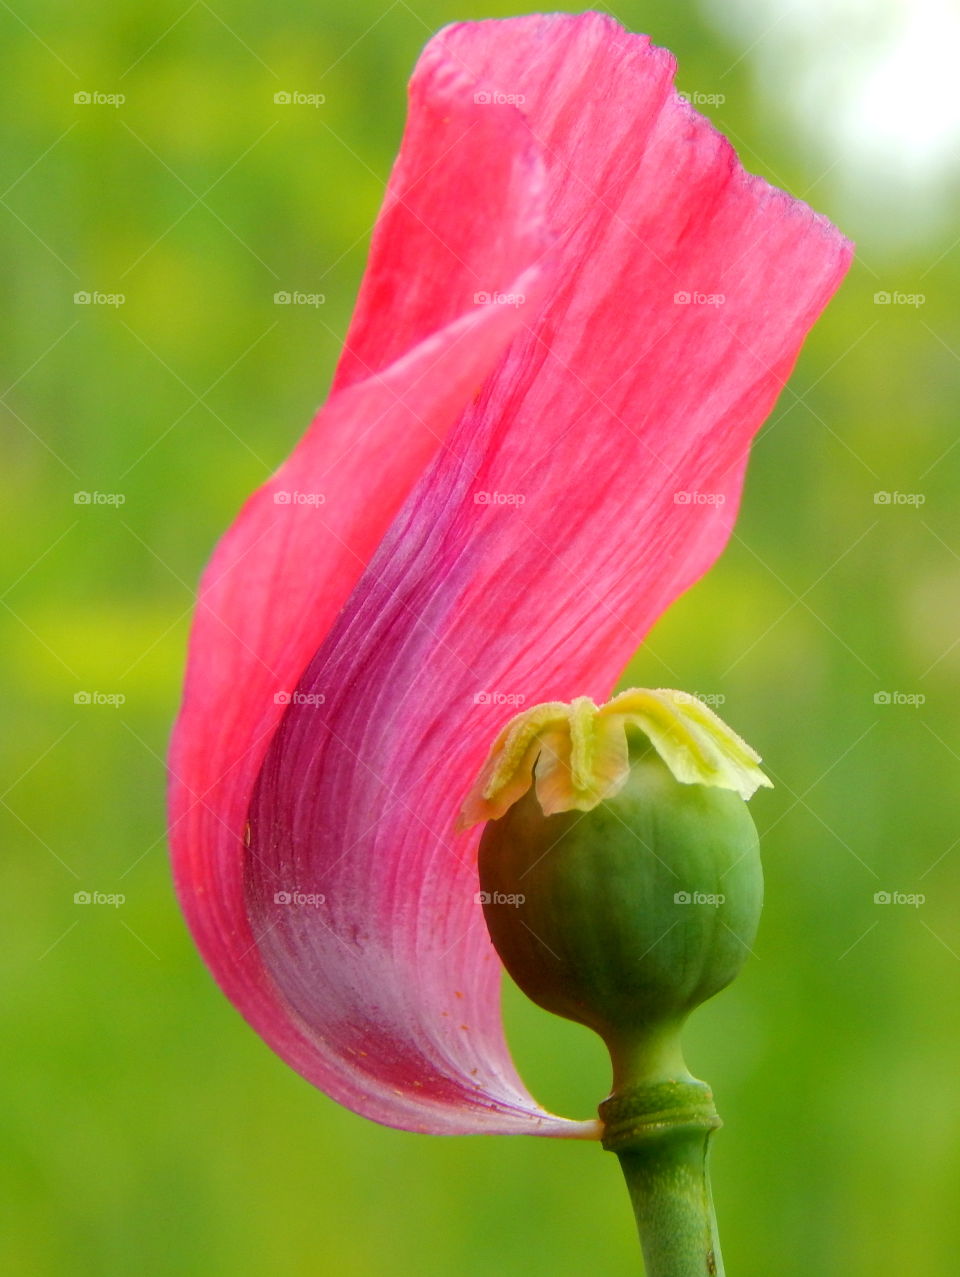 The last petal of poppy flower